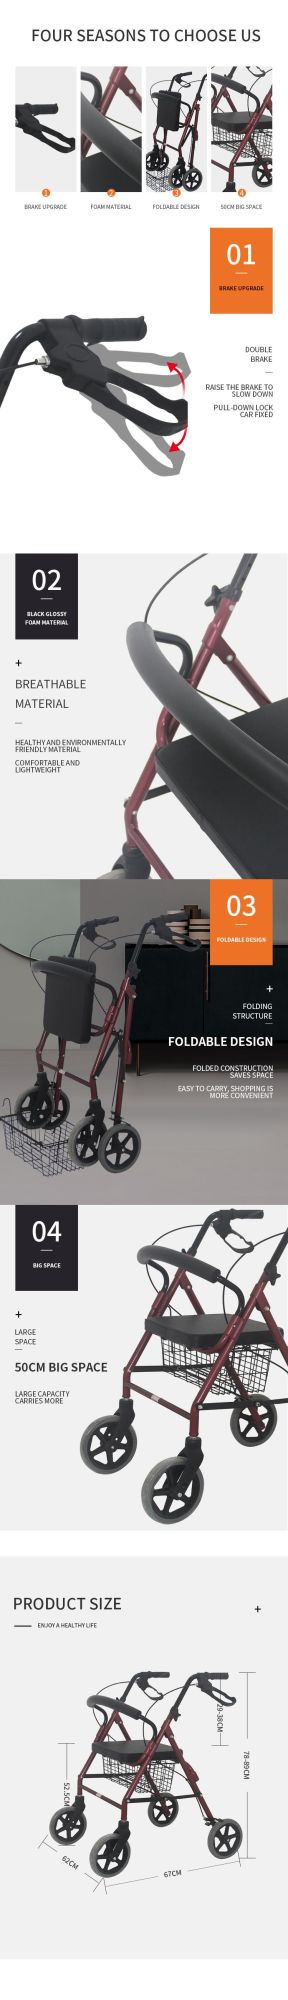 Handicapped Elderly Shopping Disability 4 Wheels Rollator Medical Foldable Adult Walker